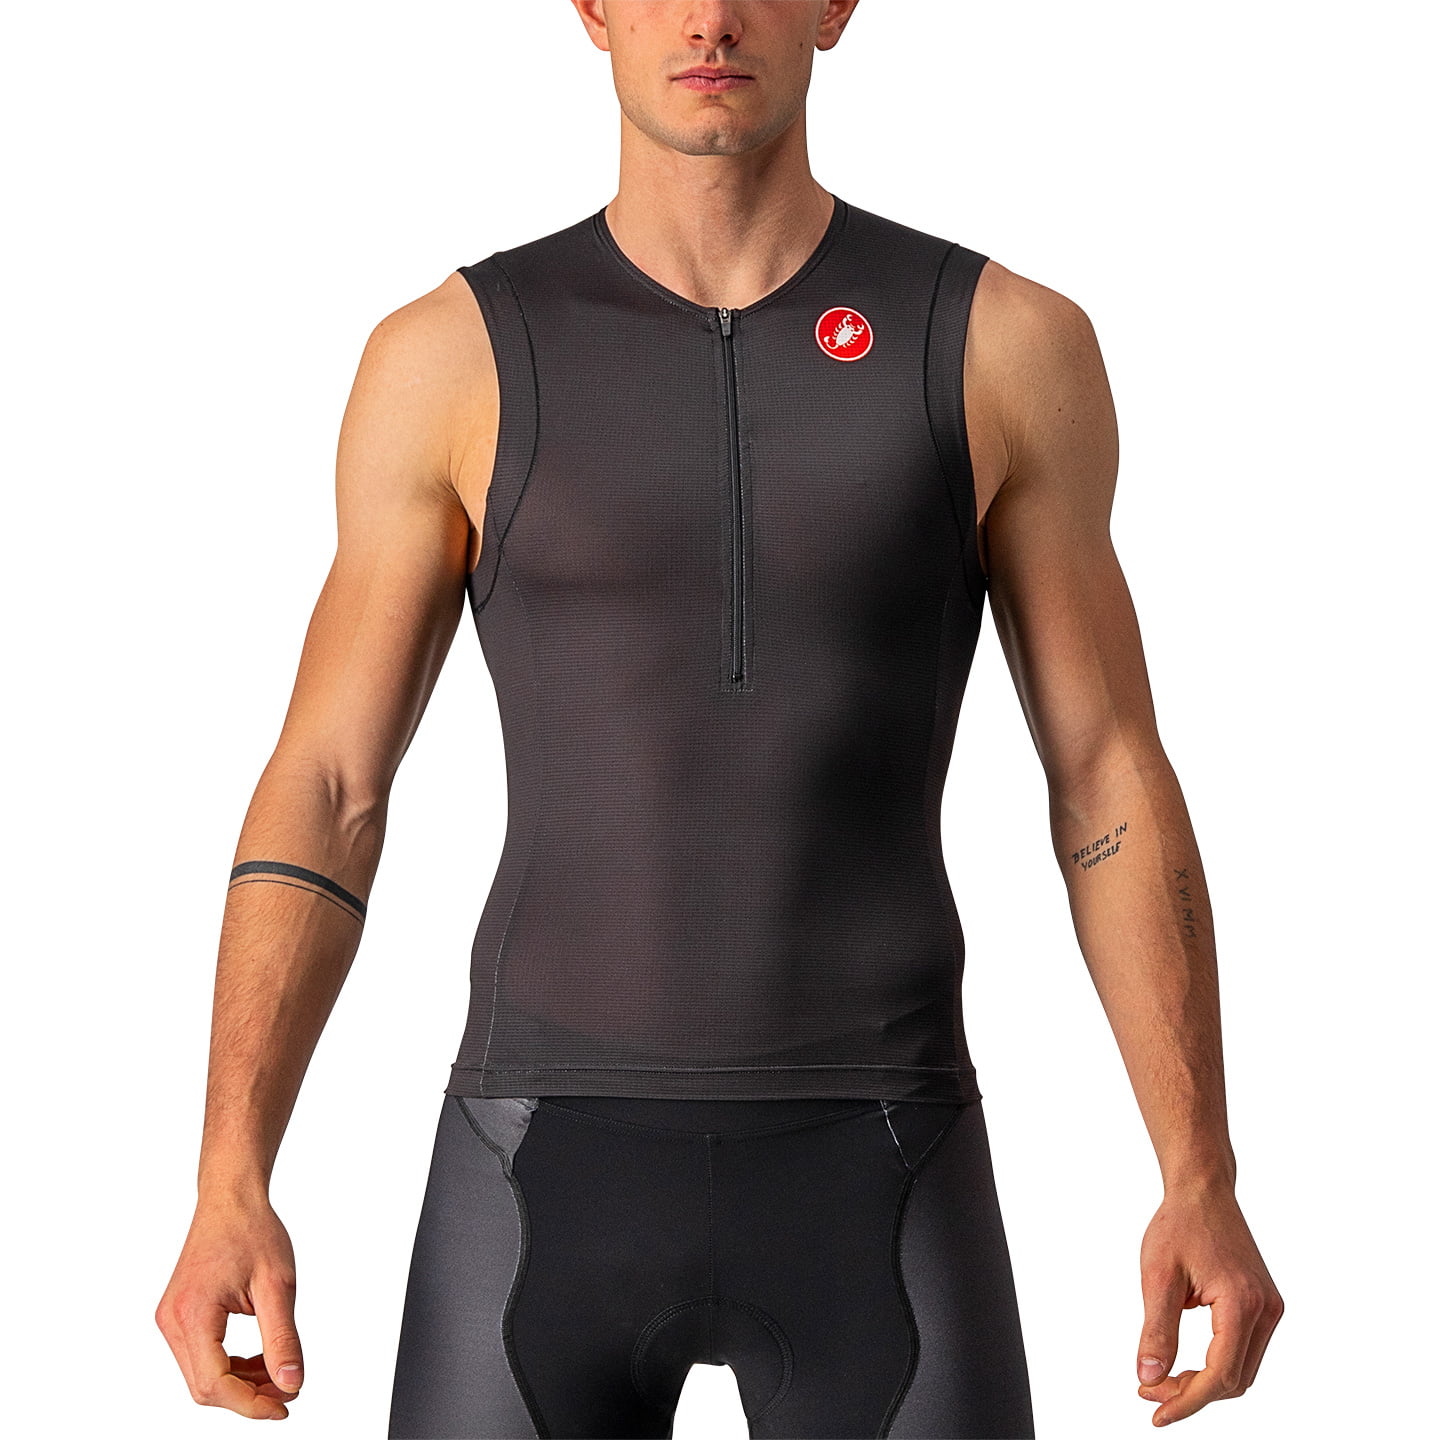 CASTELLI Free 2 Tri Top, for men, size M, Triathlon singlet, Triathlon clothes